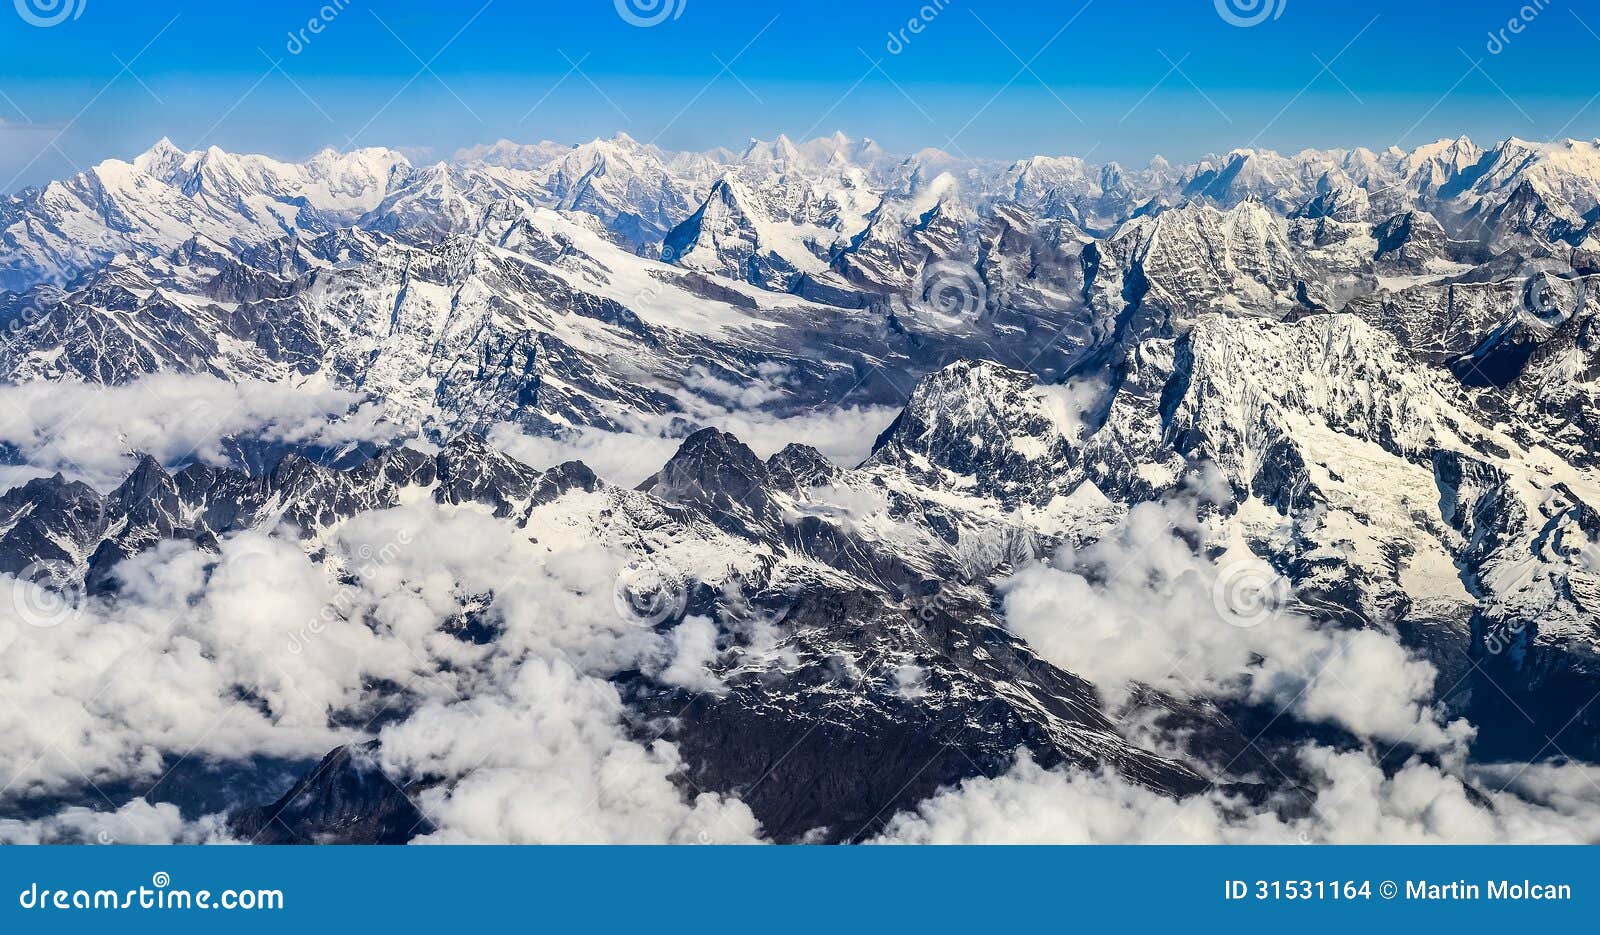 himalaya everest mountain range panorama